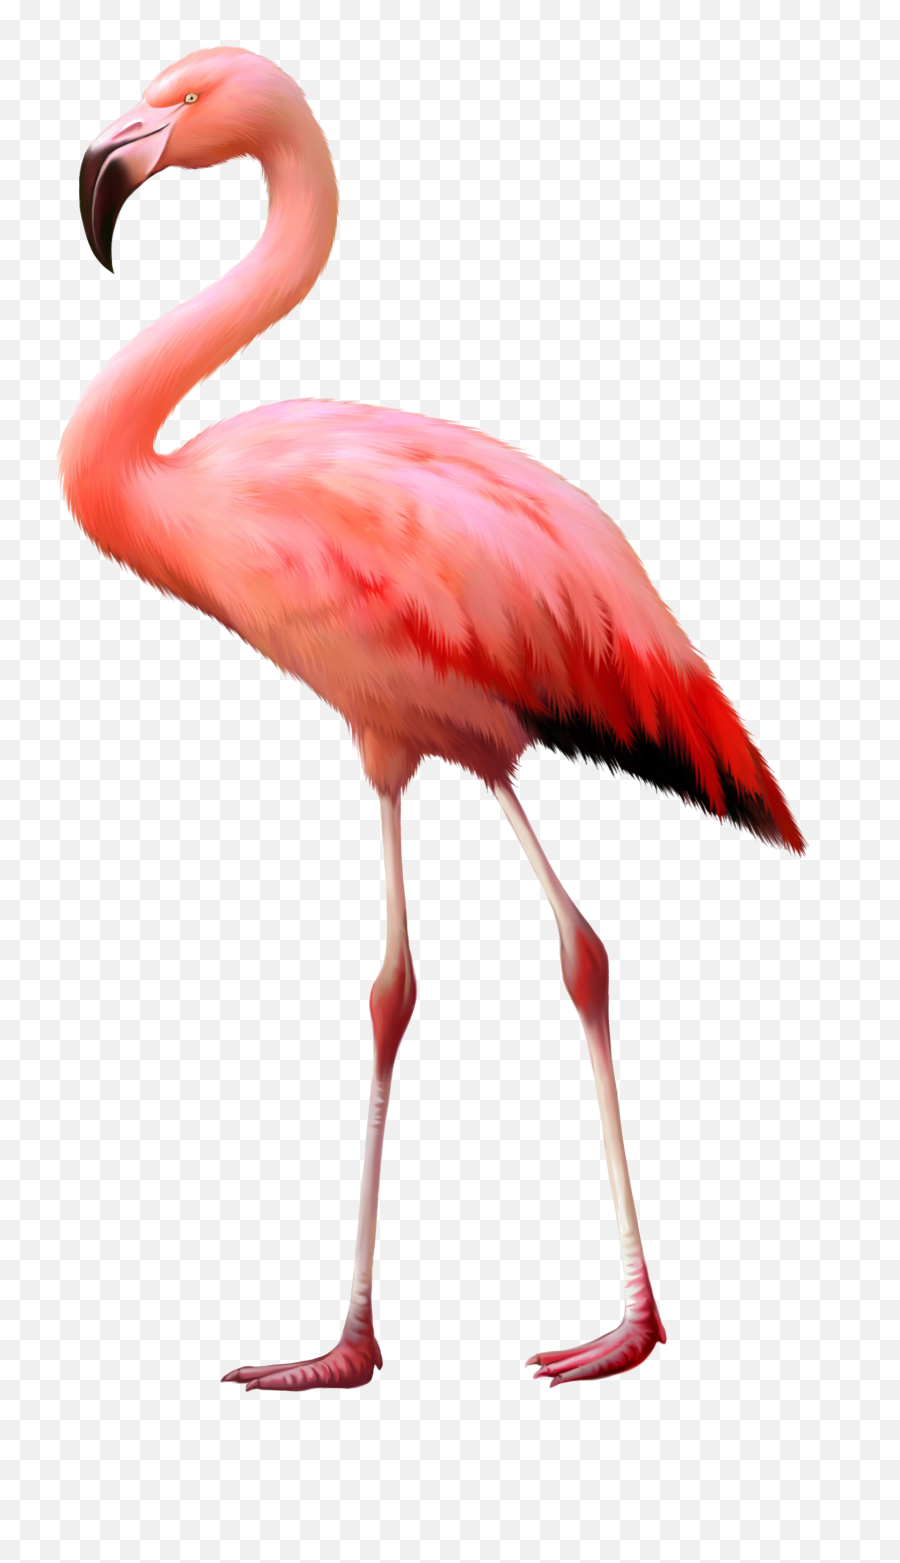 Download Flamingo Png Background Image - Transparent Background Flamingo Png,Flamingo Transparent Background